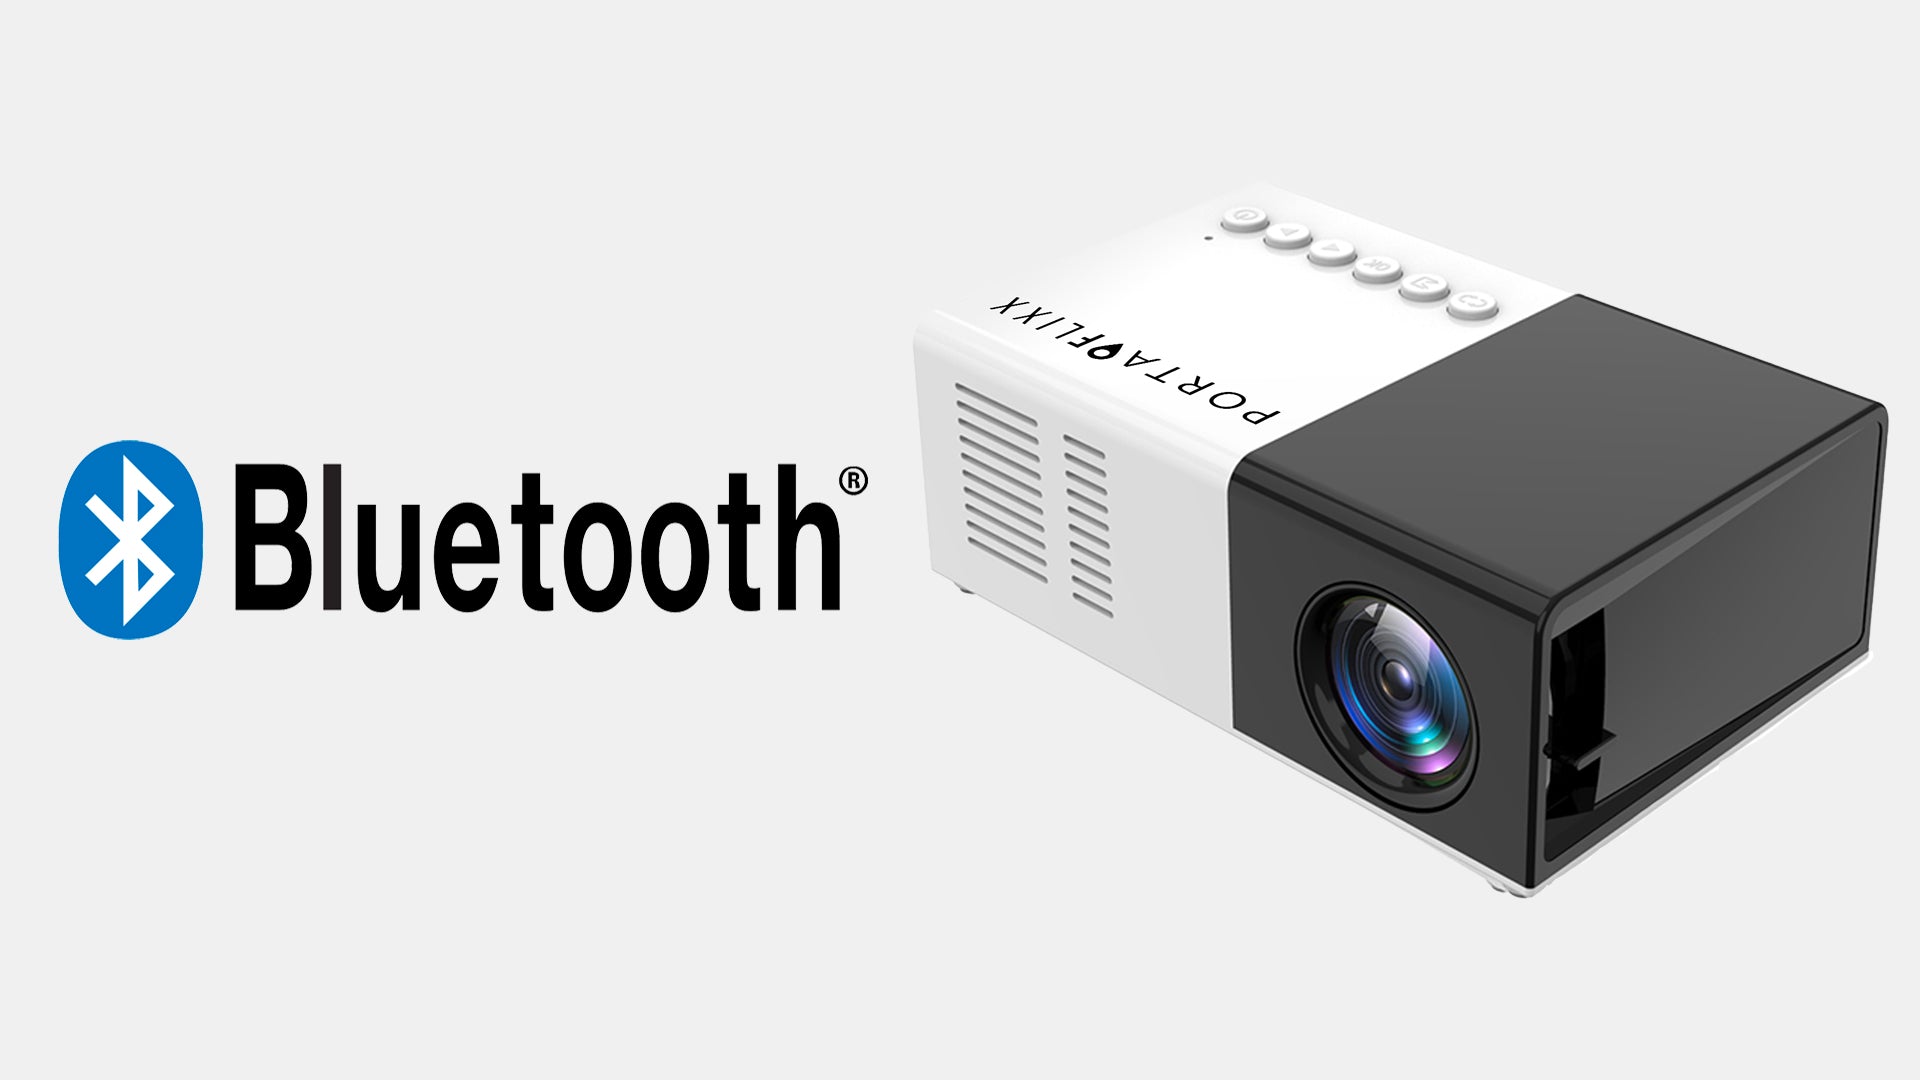  Portaflixx - Mini proyector 4k con Wifi y Bluetooth